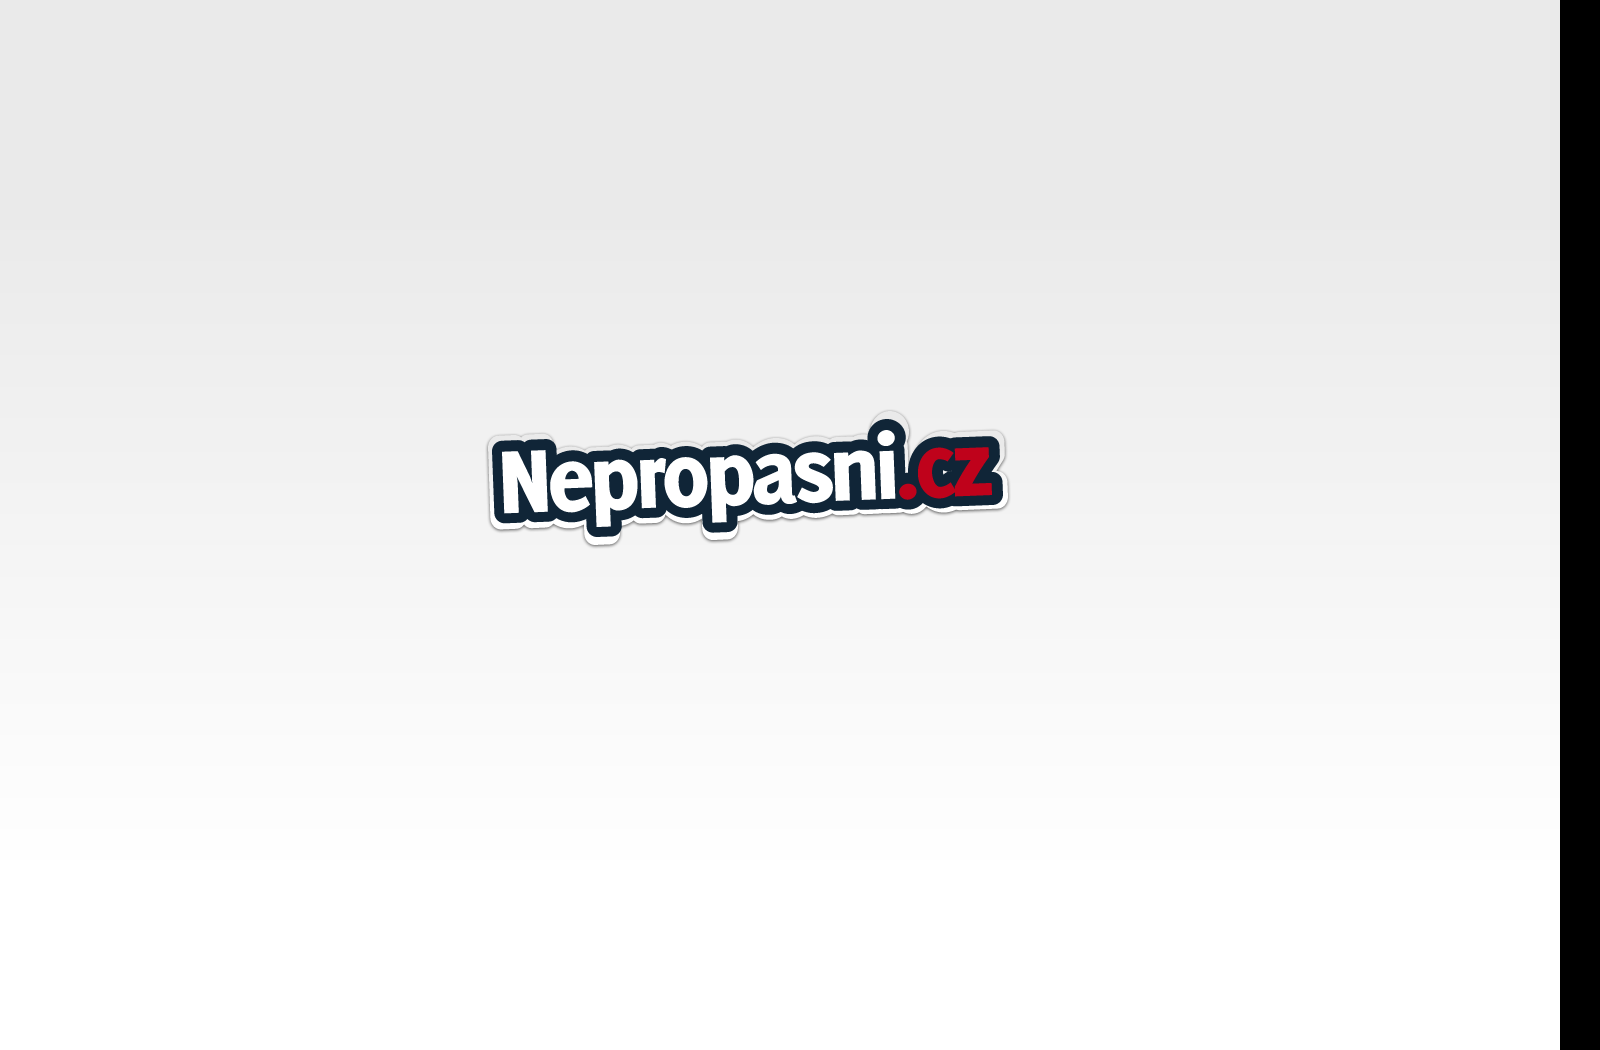 Tapeta nepropasni_cz___logo